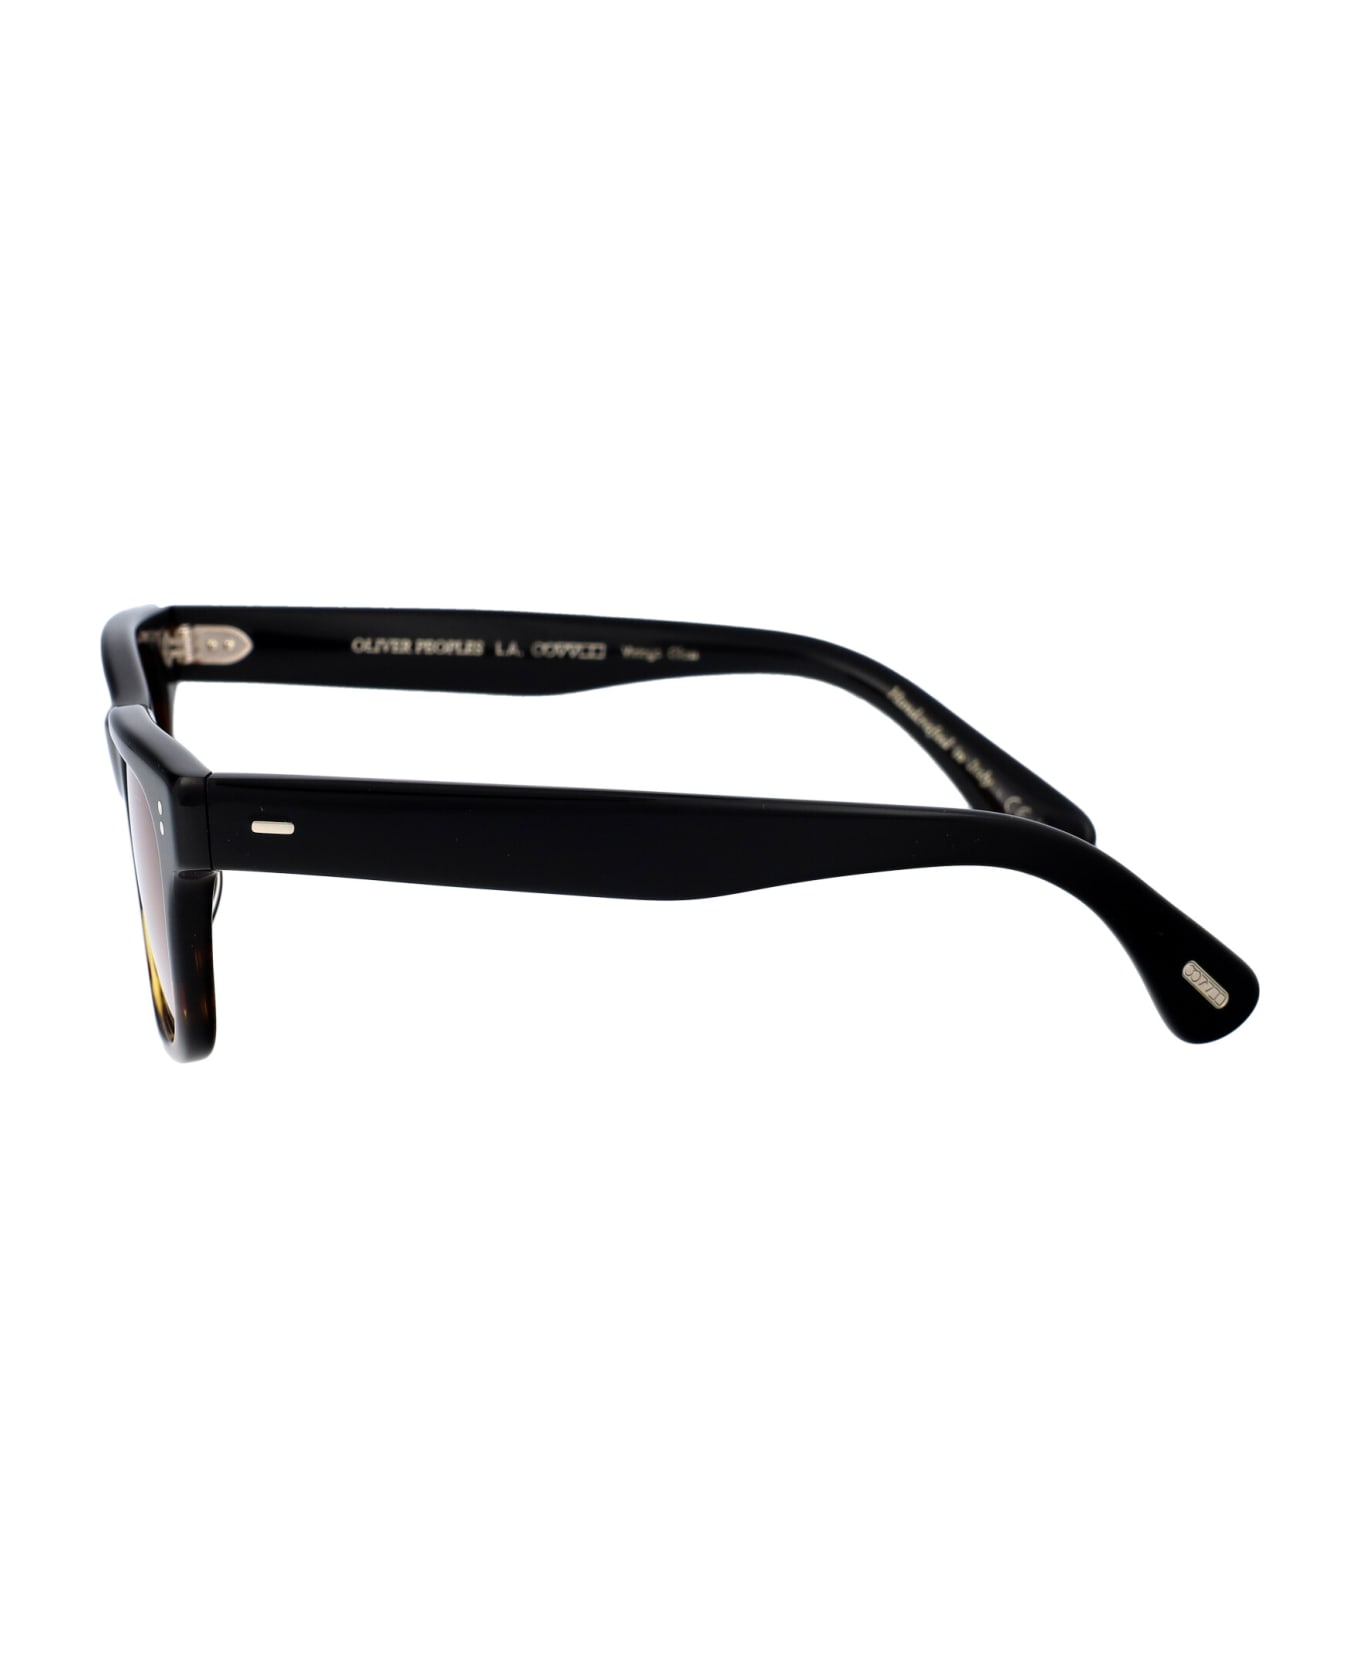 Oliver Peoples Rosson Sun Sunglasses - 172253 Black/362 Gradient